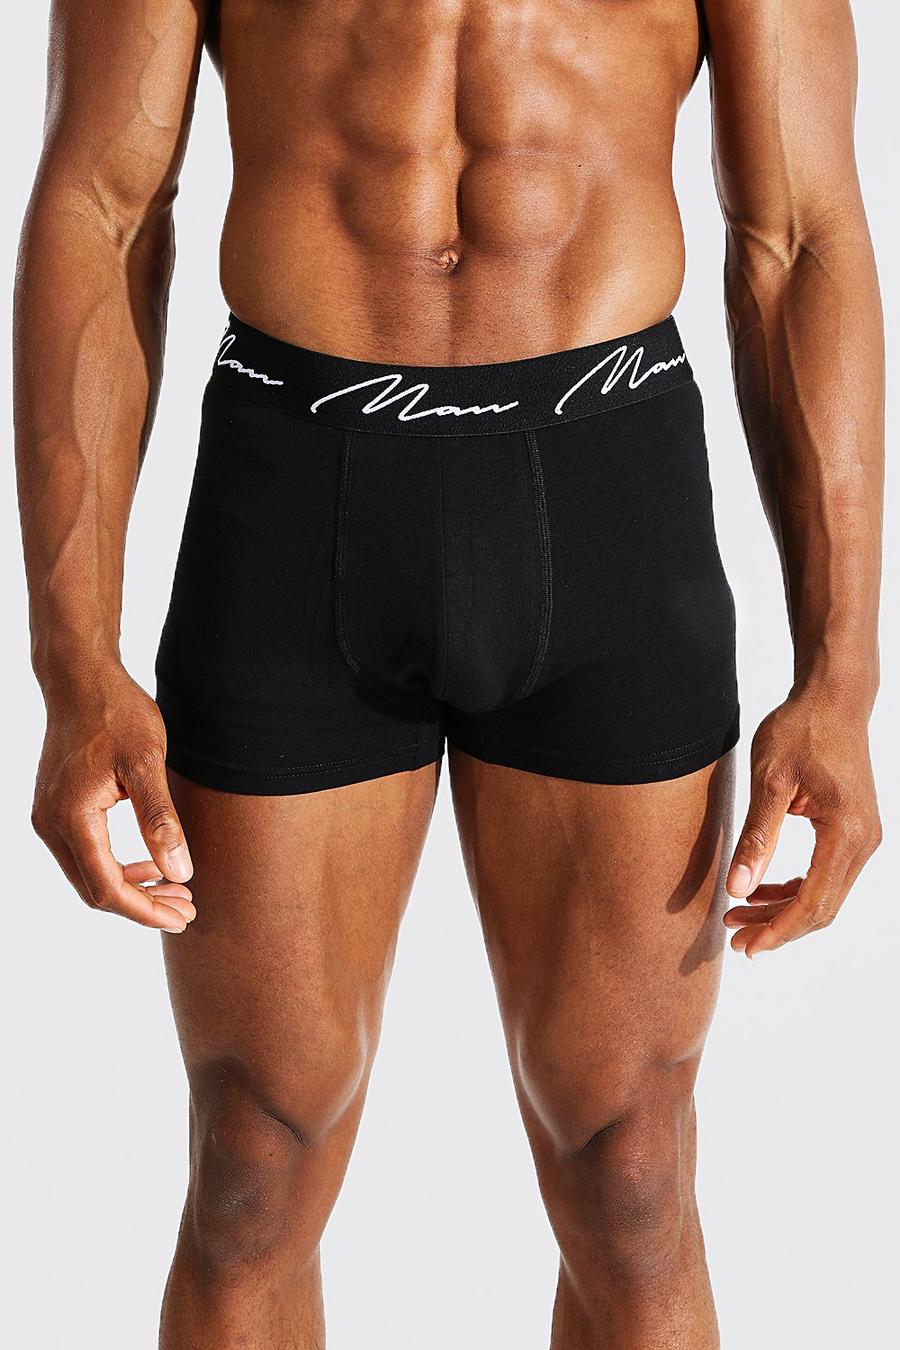 5er-Pack mittellange Man Signature Boxershorts, Black noir